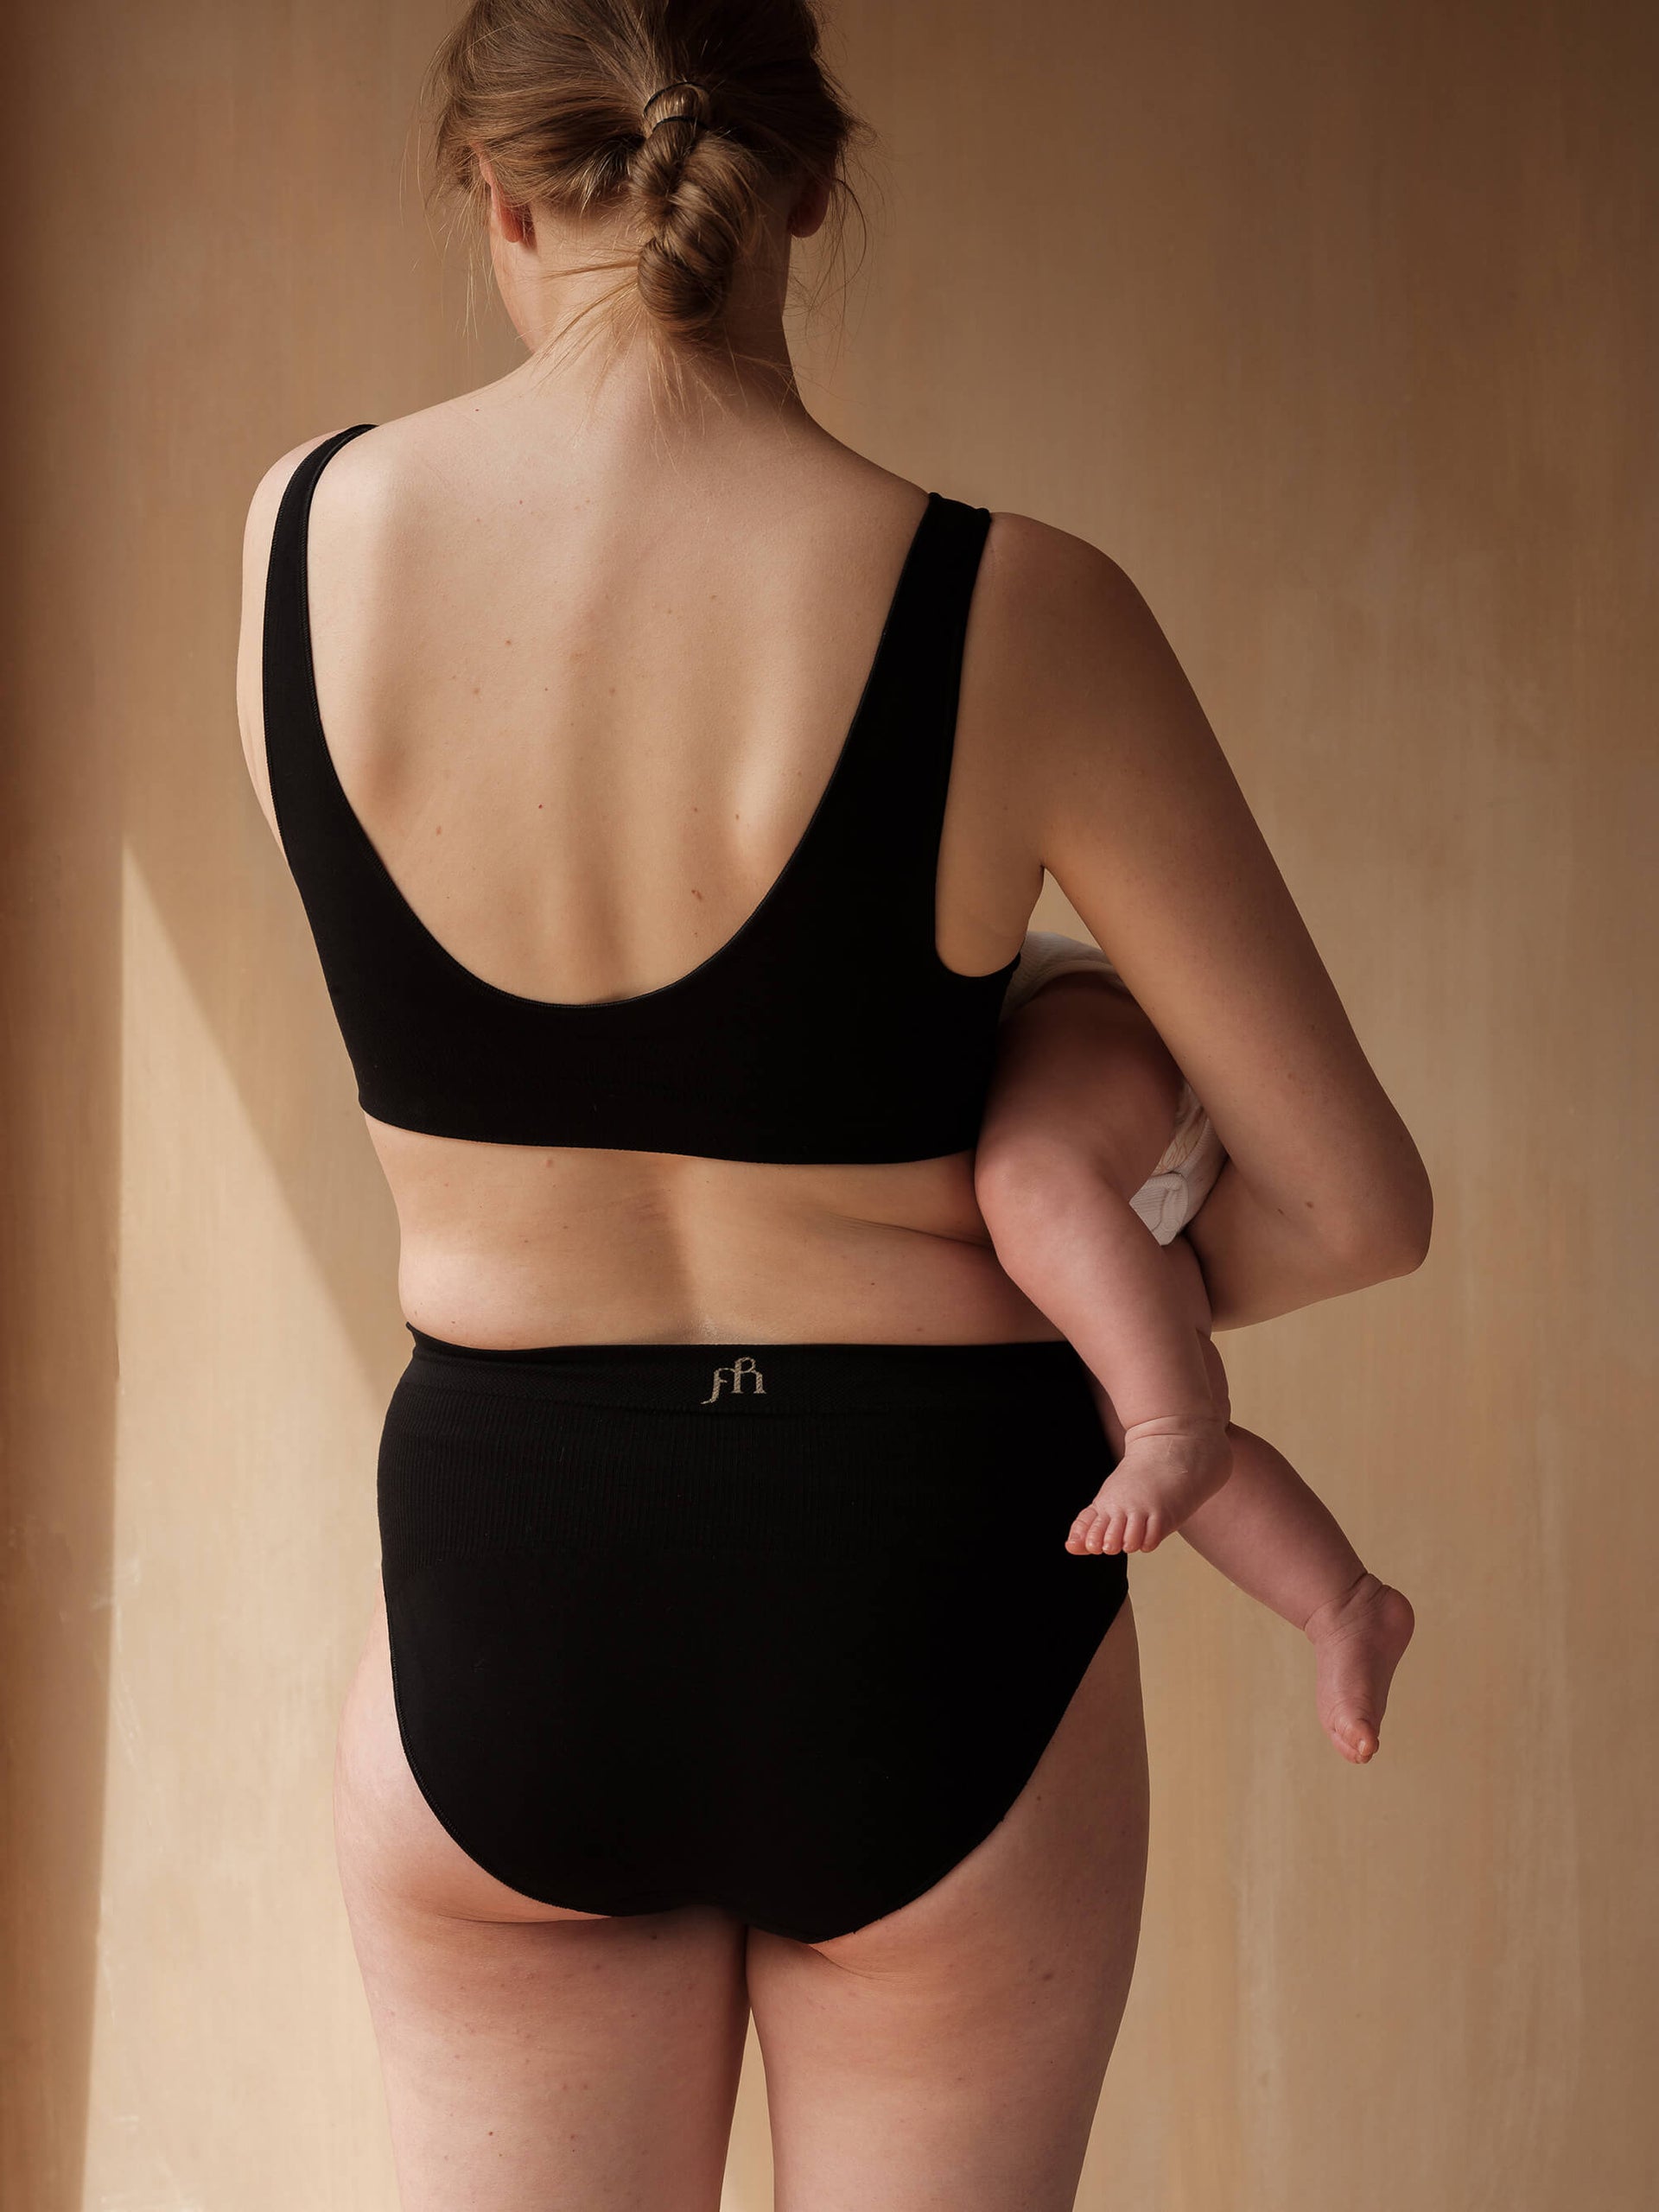 Jorgen House black colour maternity breastfeeding bra and briefs on a female body feeding her baby